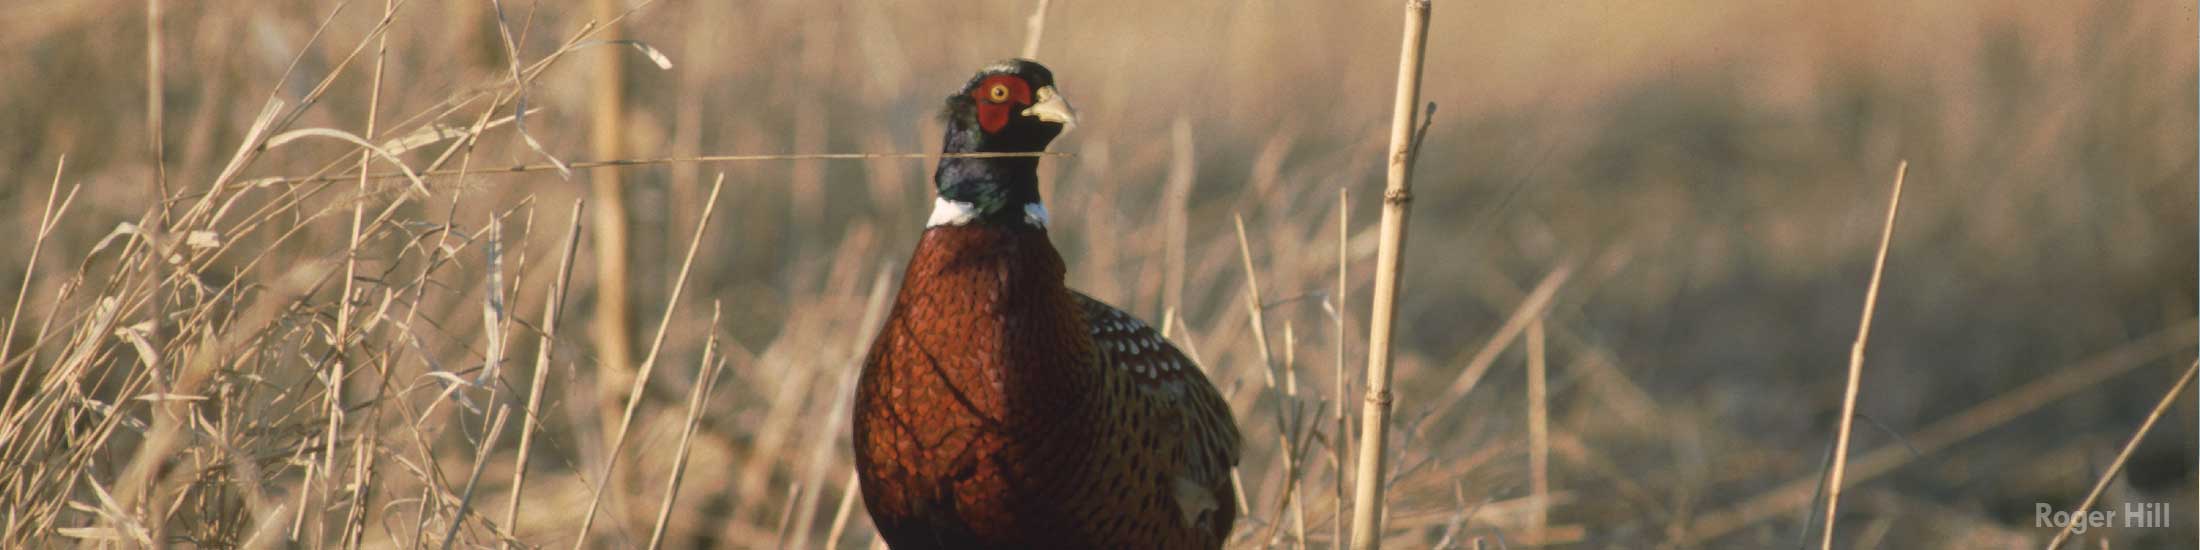 Pheasant hunting in Iowa